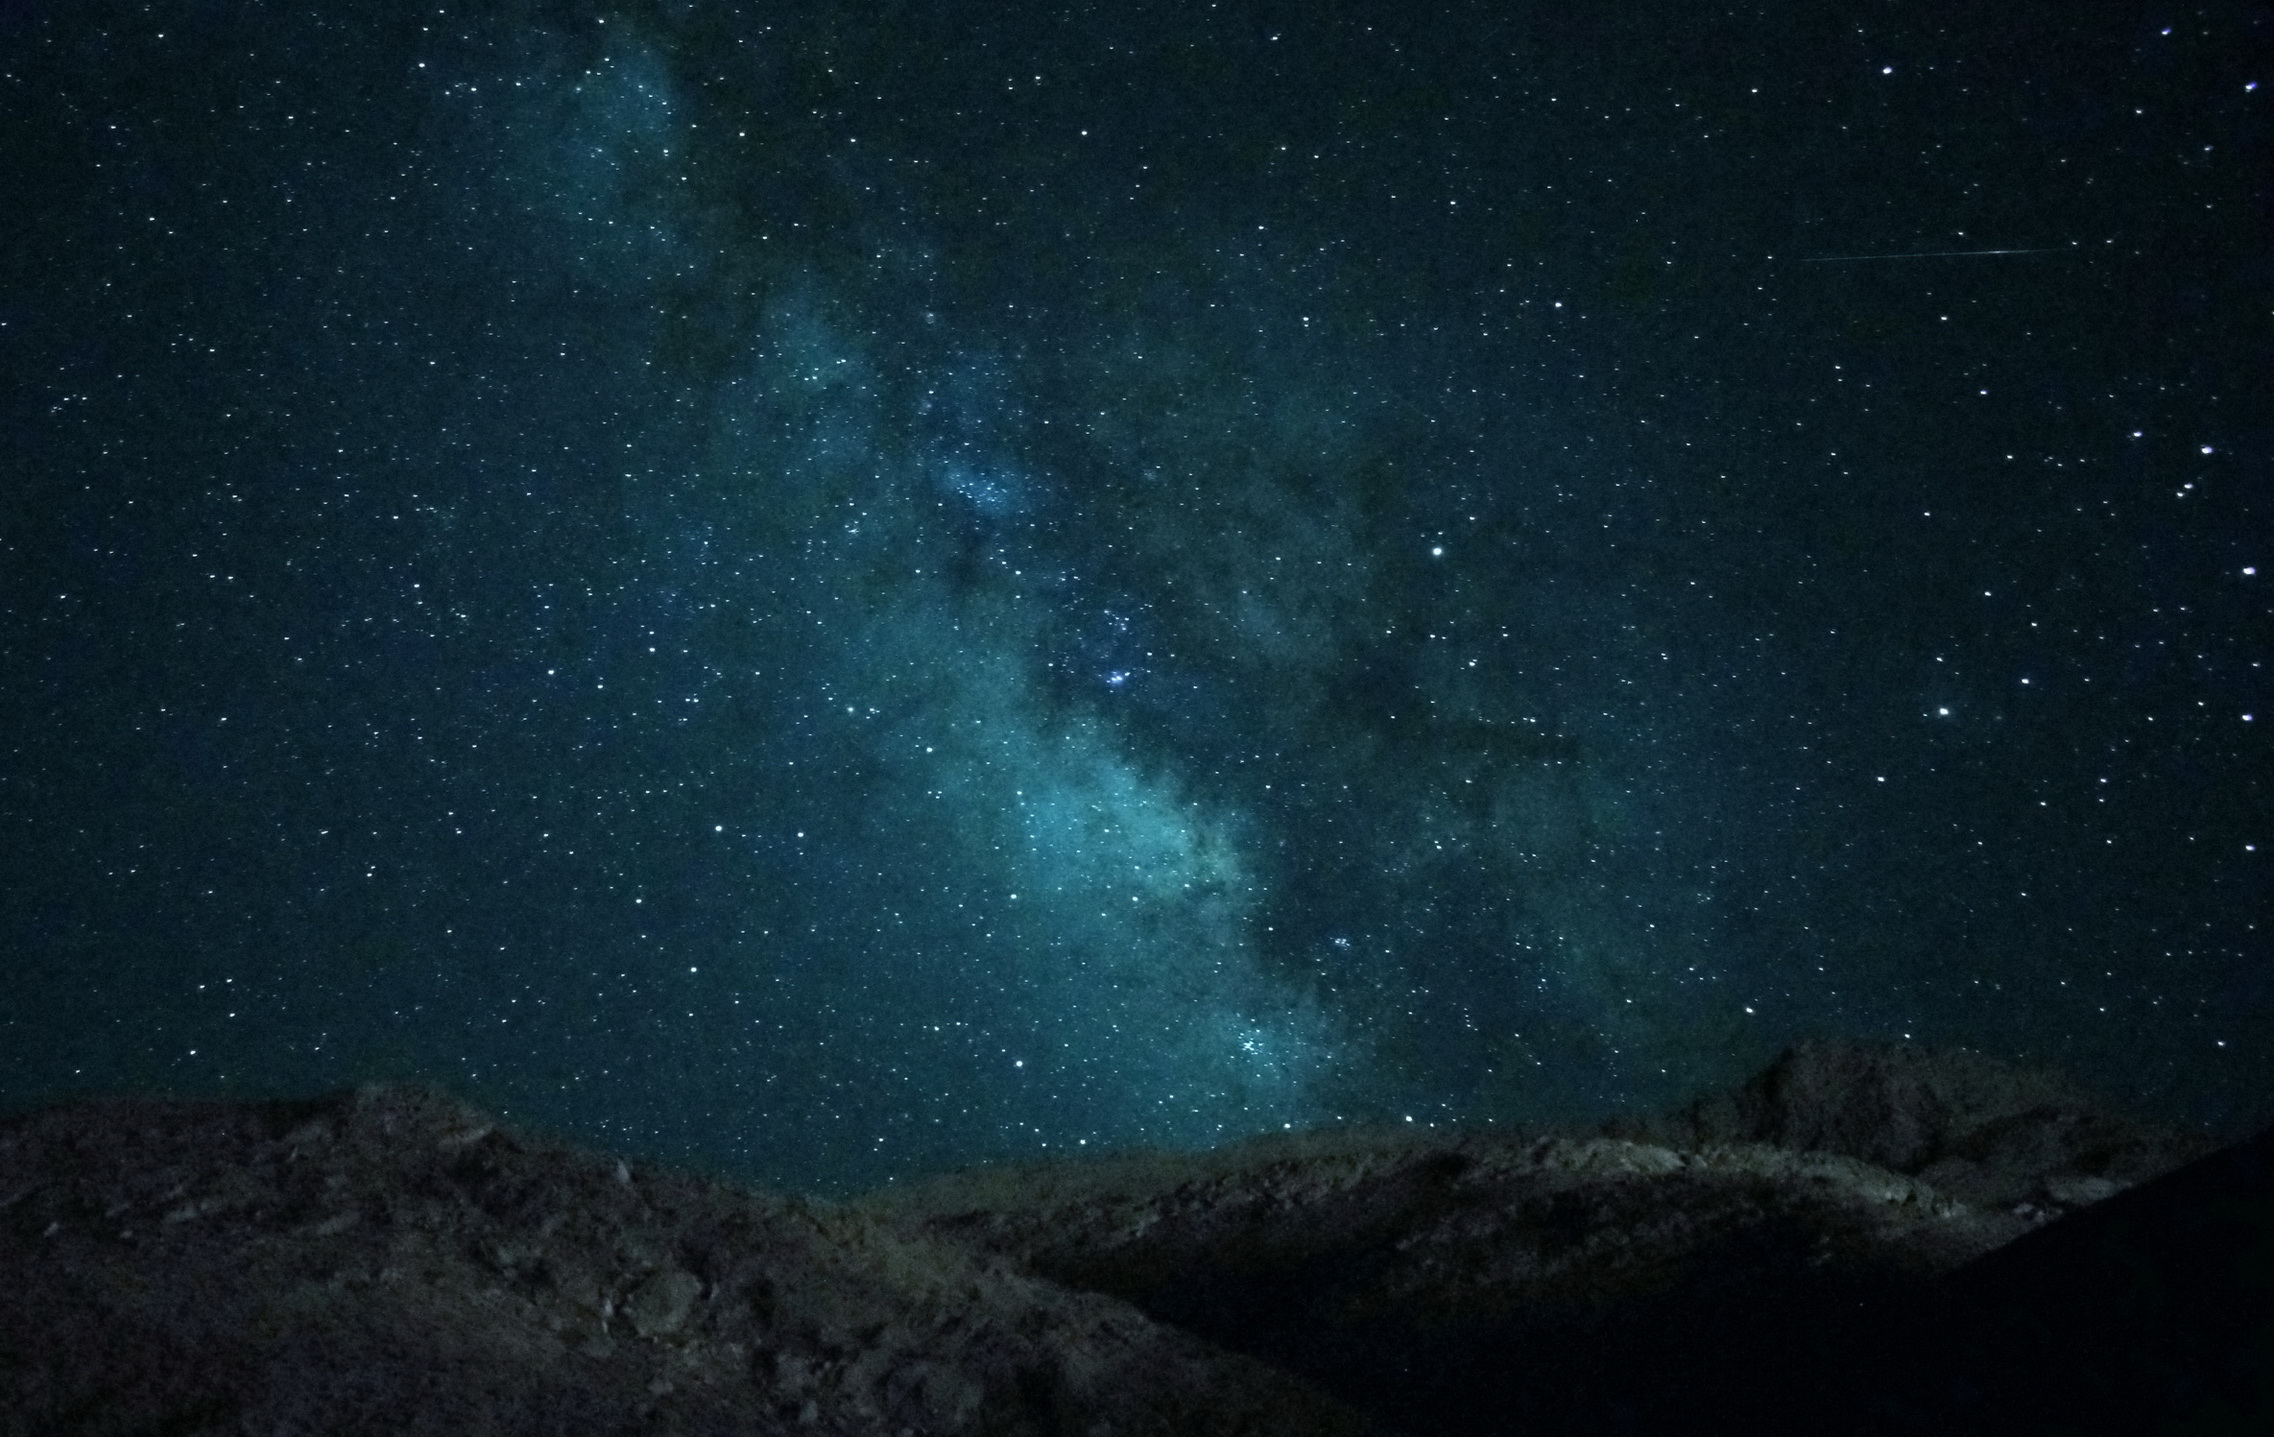 Milky Way over Khar Turan National Park